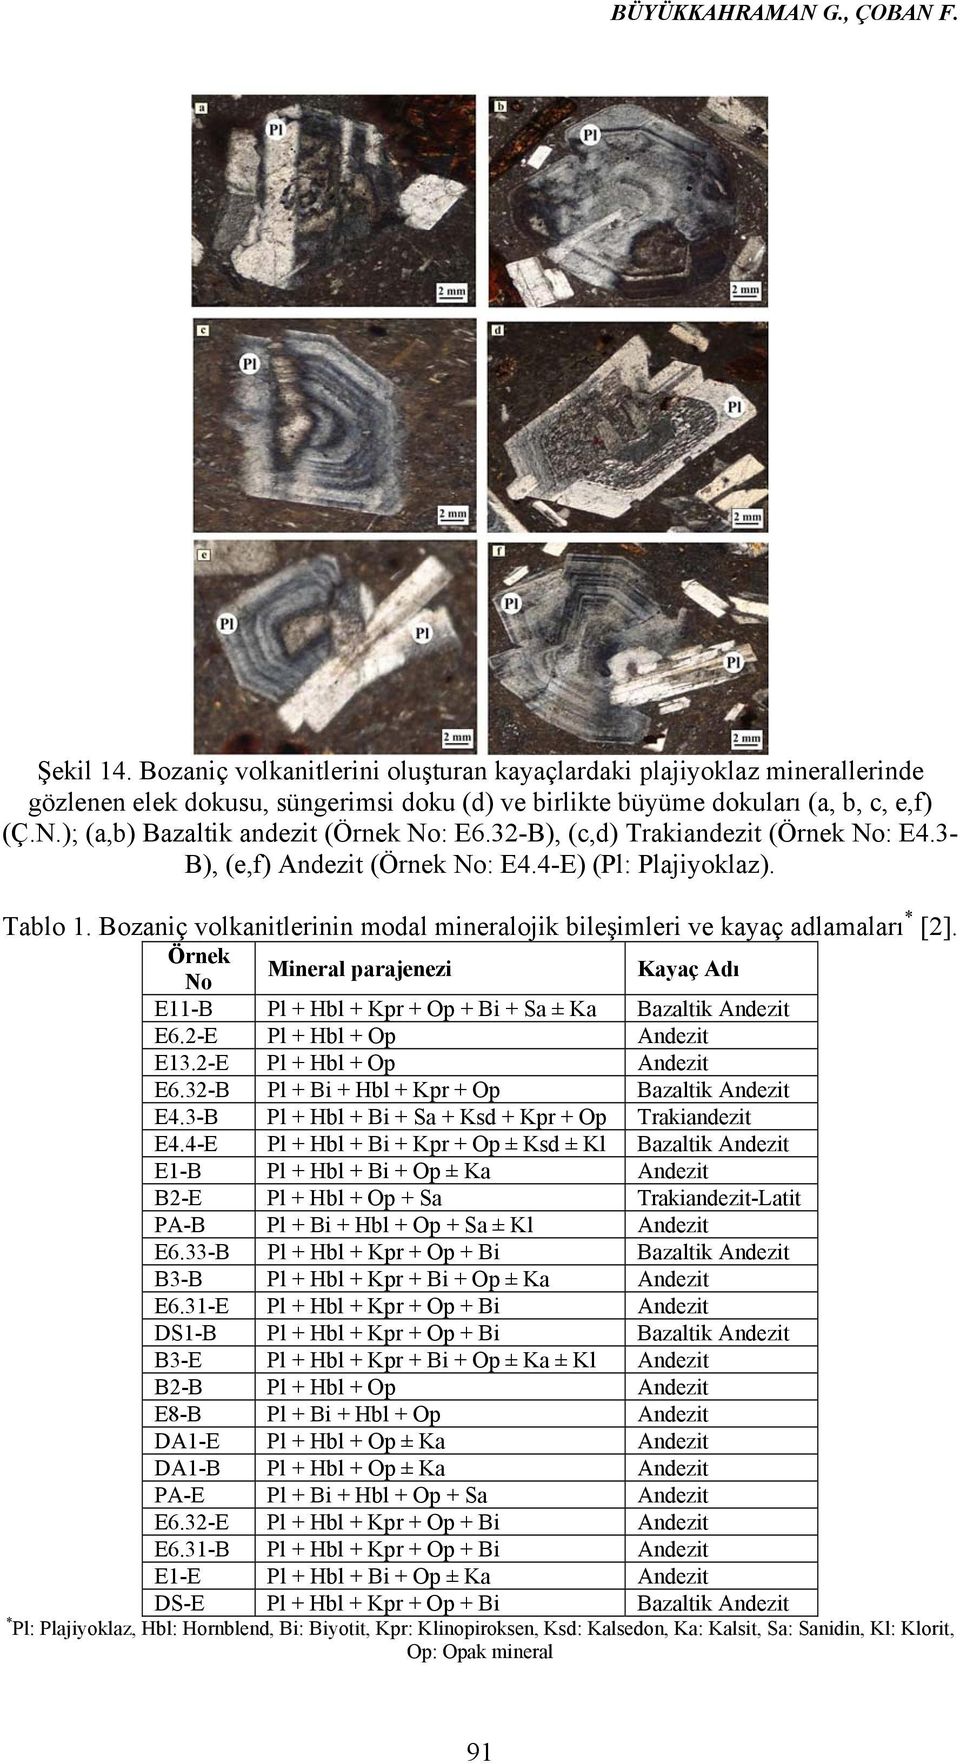 Örnek No Mineral parajenezi Kayaç Adı E11-B Pl + Hbl + Kpr + Op + Bi + Sa ± Ka Bazaltik Andezit E6.2-E Pl + Hbl + Op Andezit E13.2-E Pl + Hbl + Op Andezit E6.